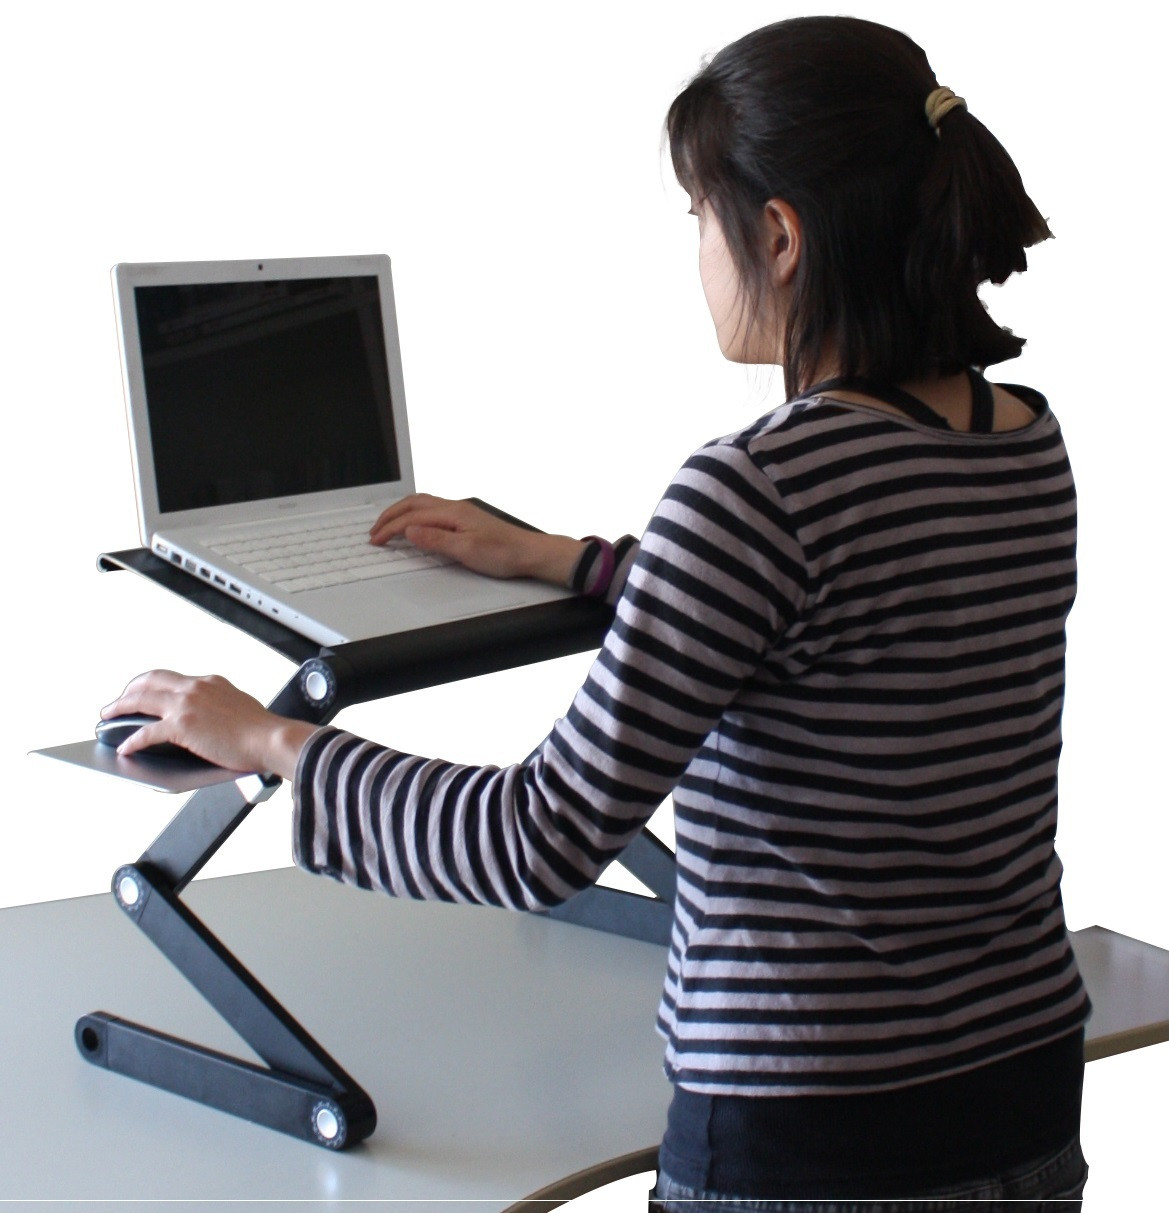 Laptop Stand & Standing Desk Black - Uncaged Ergonomics